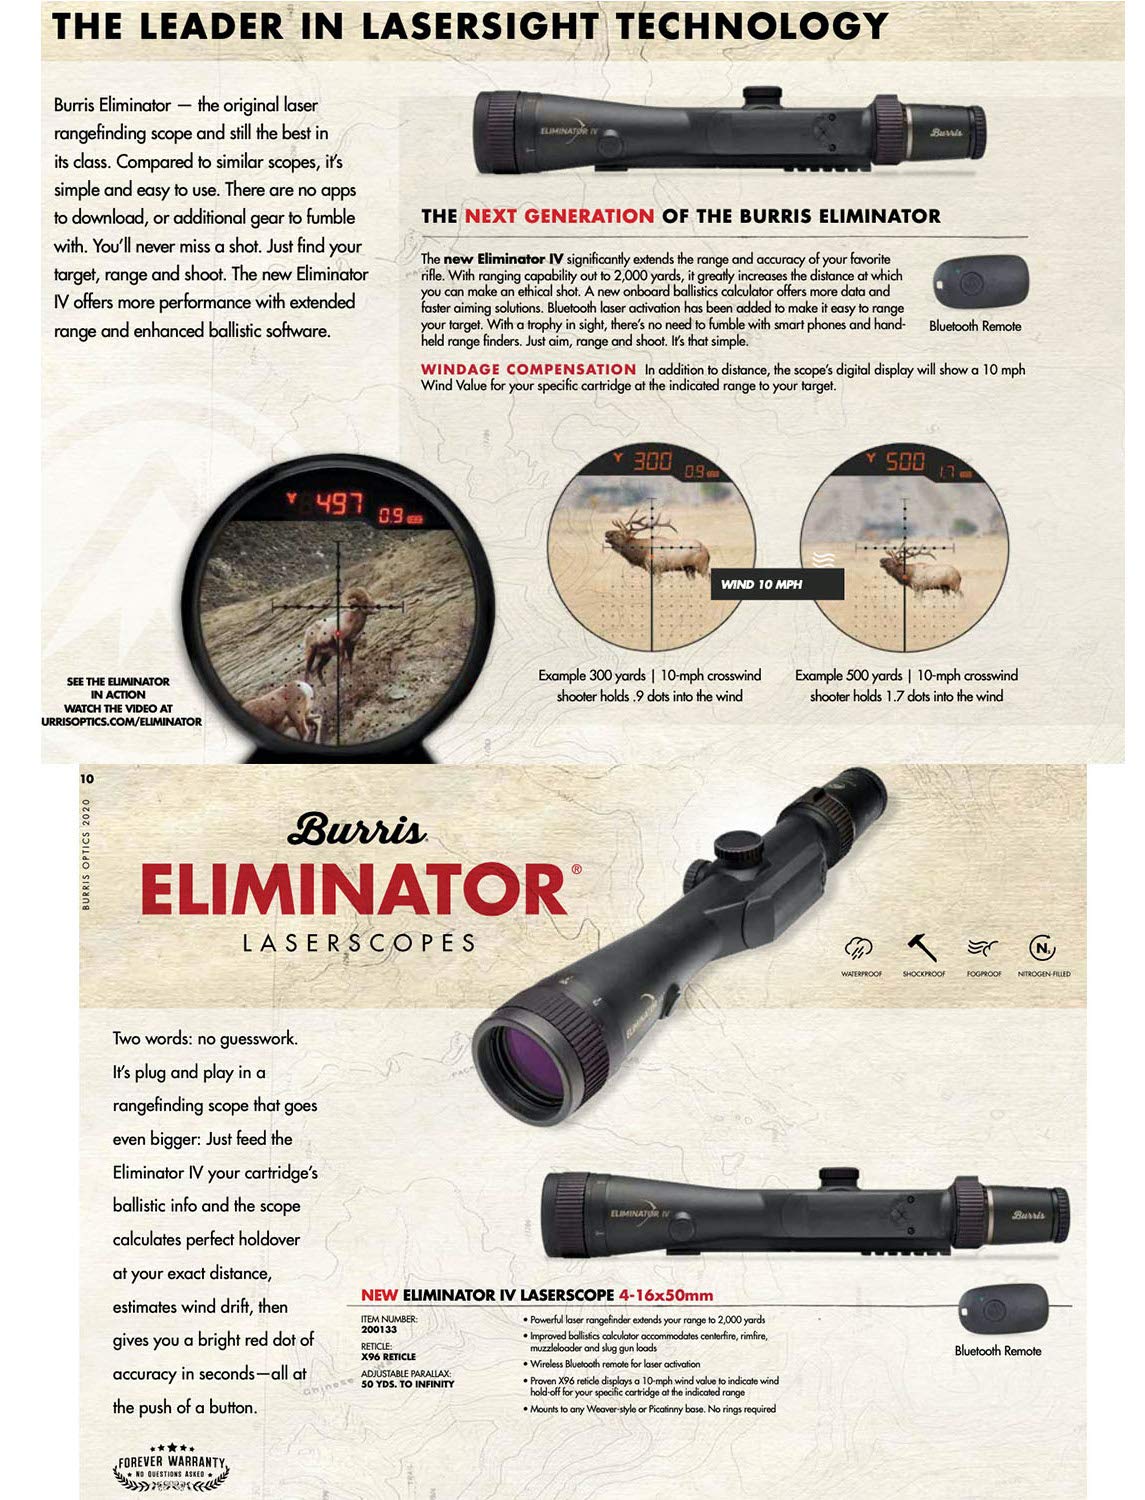 Burris Eliminator 4-16x50mm Laser Rangefinding Scope with Ballistic Calculator